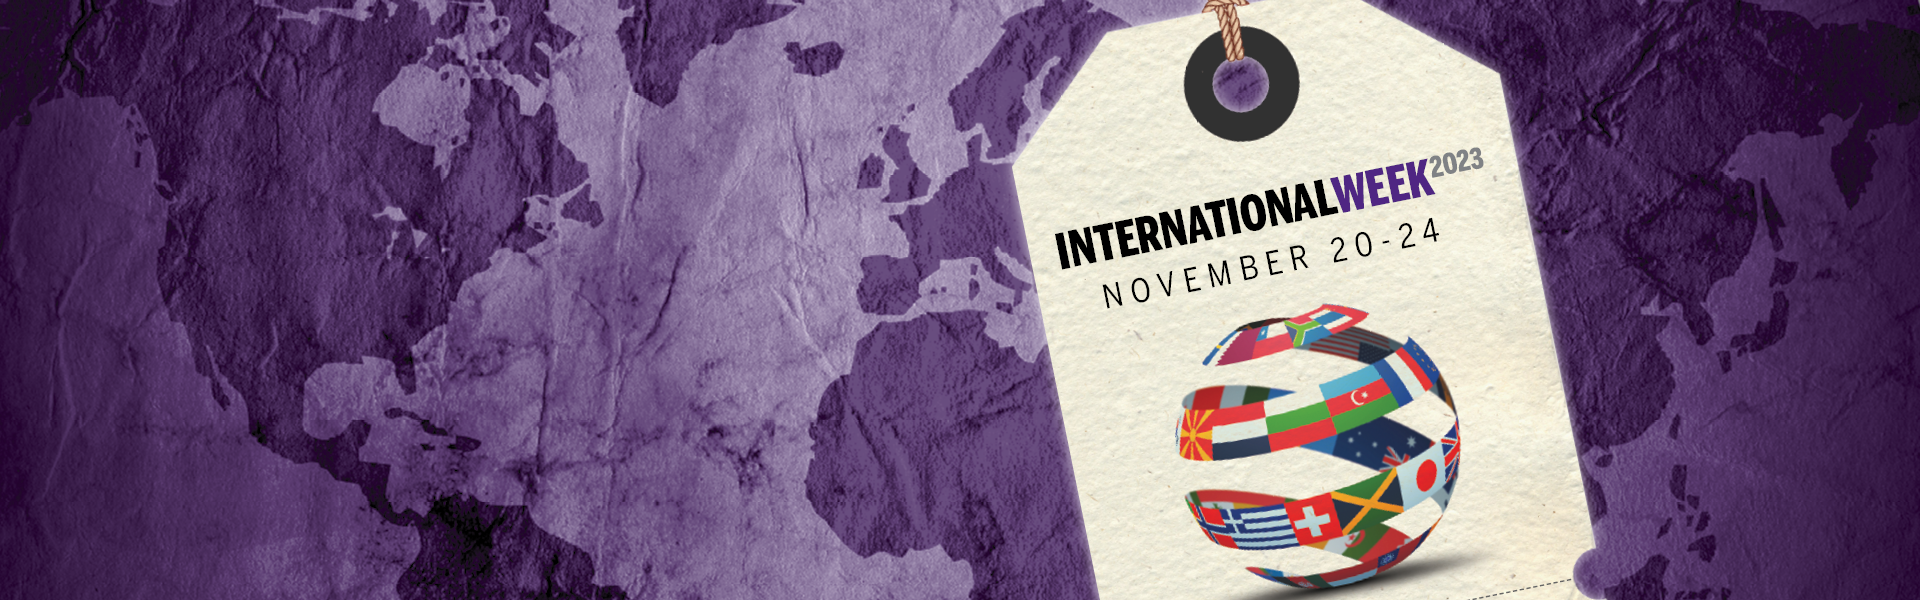 International Week: November 20 - 24